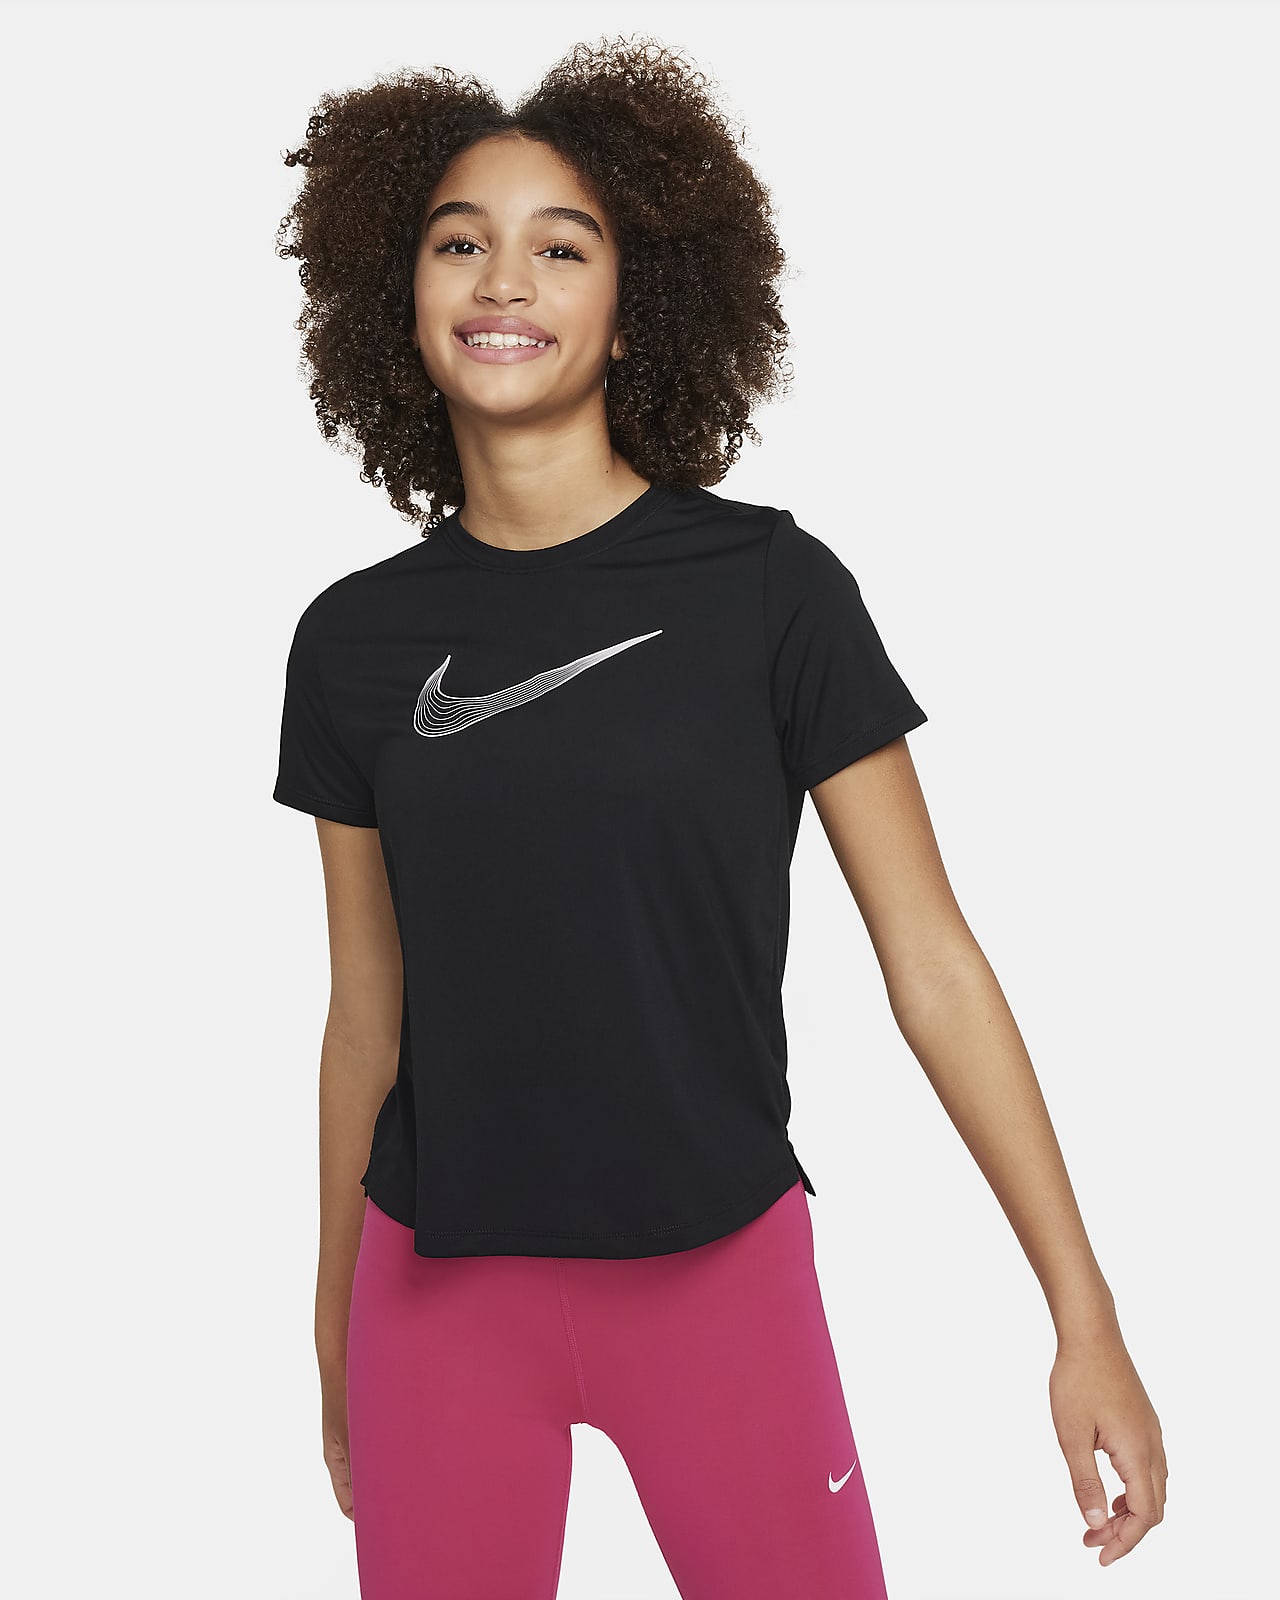 Nike Girls' Dri-FIT Long-Sleeve Top. Nike PH